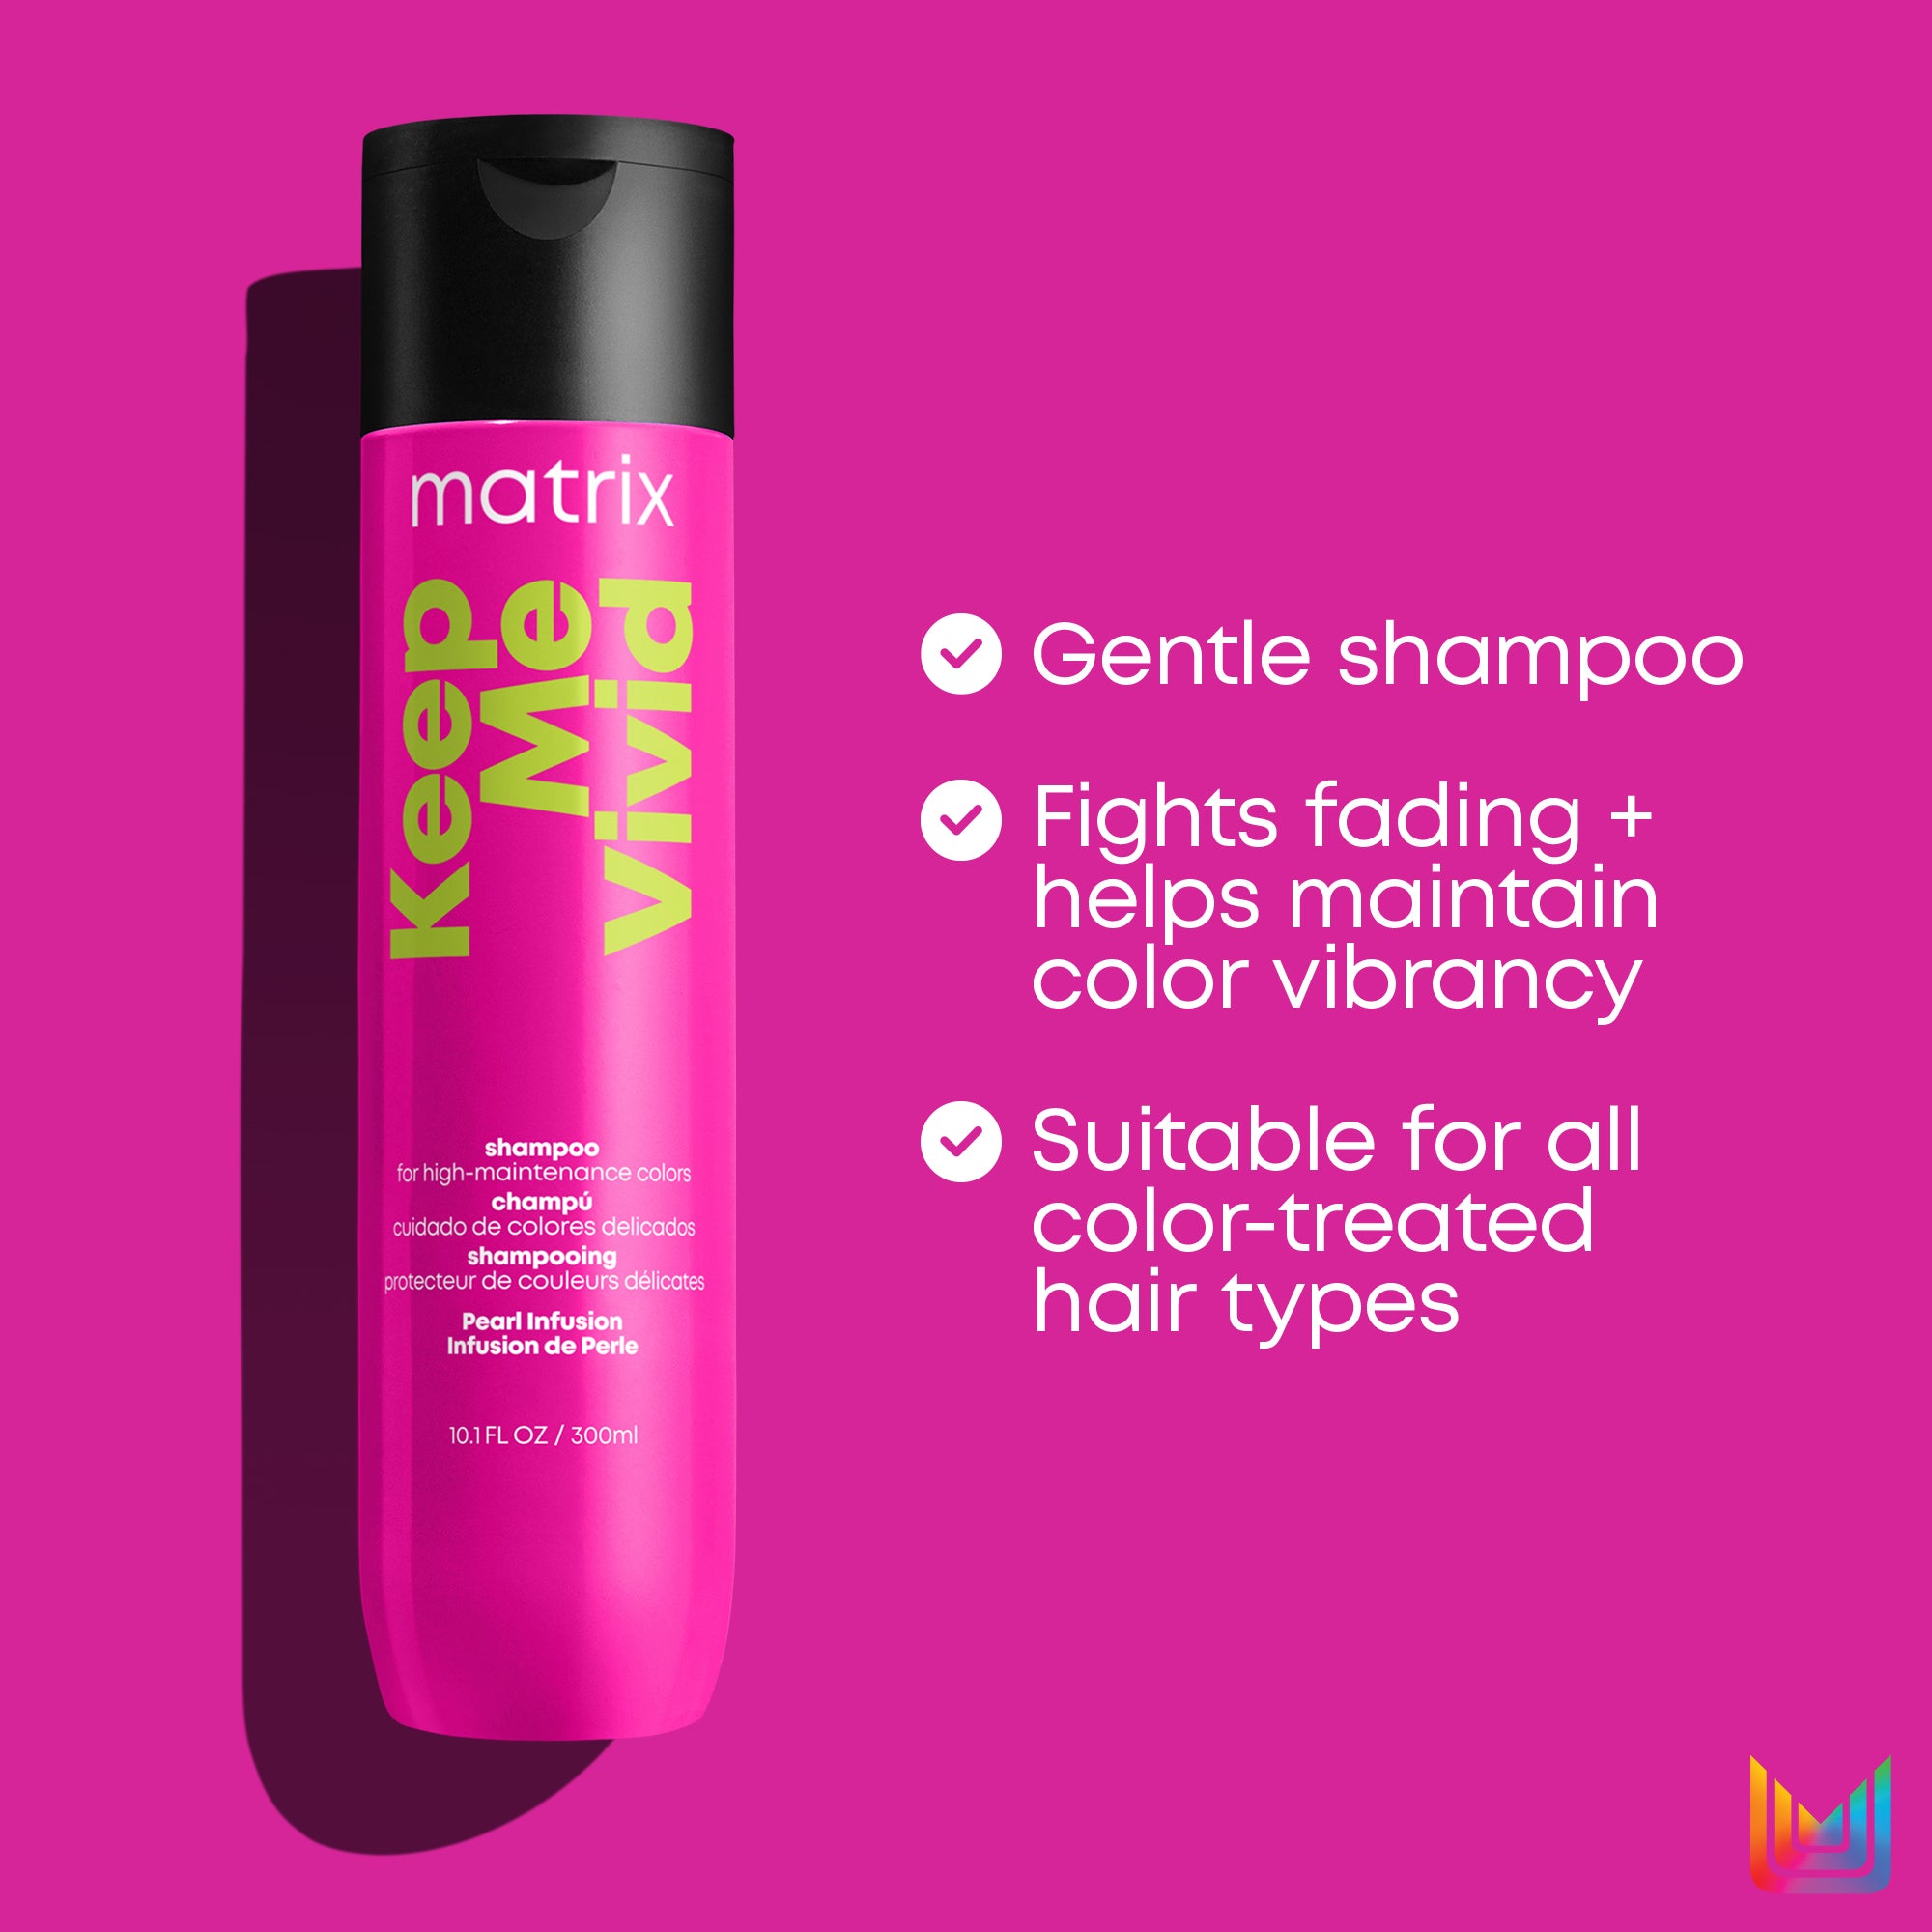 Matrix Me Vivid Shampoo and Planet Beauty